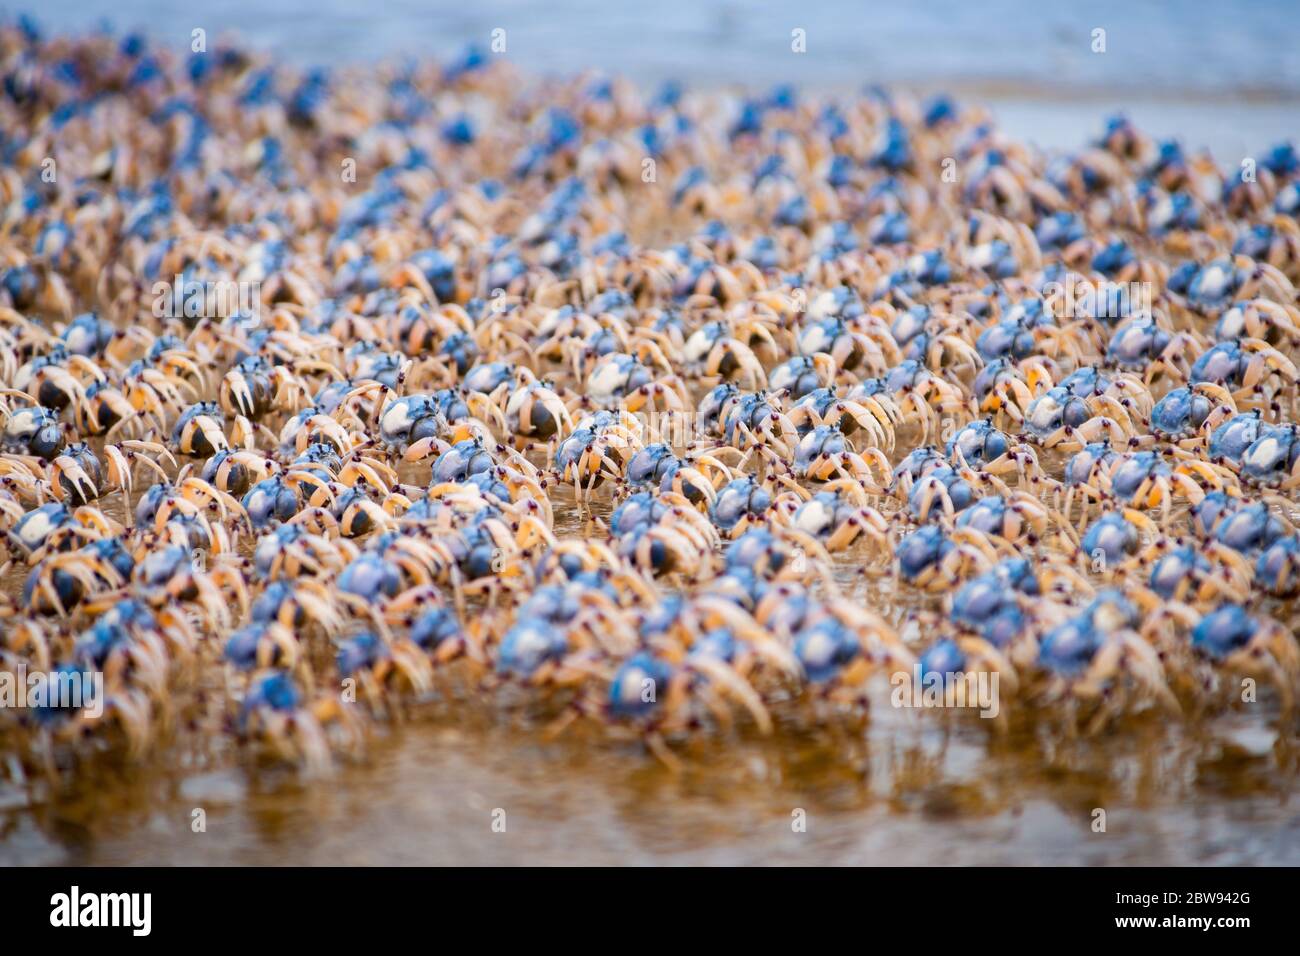 Soldier Crabs on en-masse marching together on Fraser Island, Queensland, Australia. Stock Photo